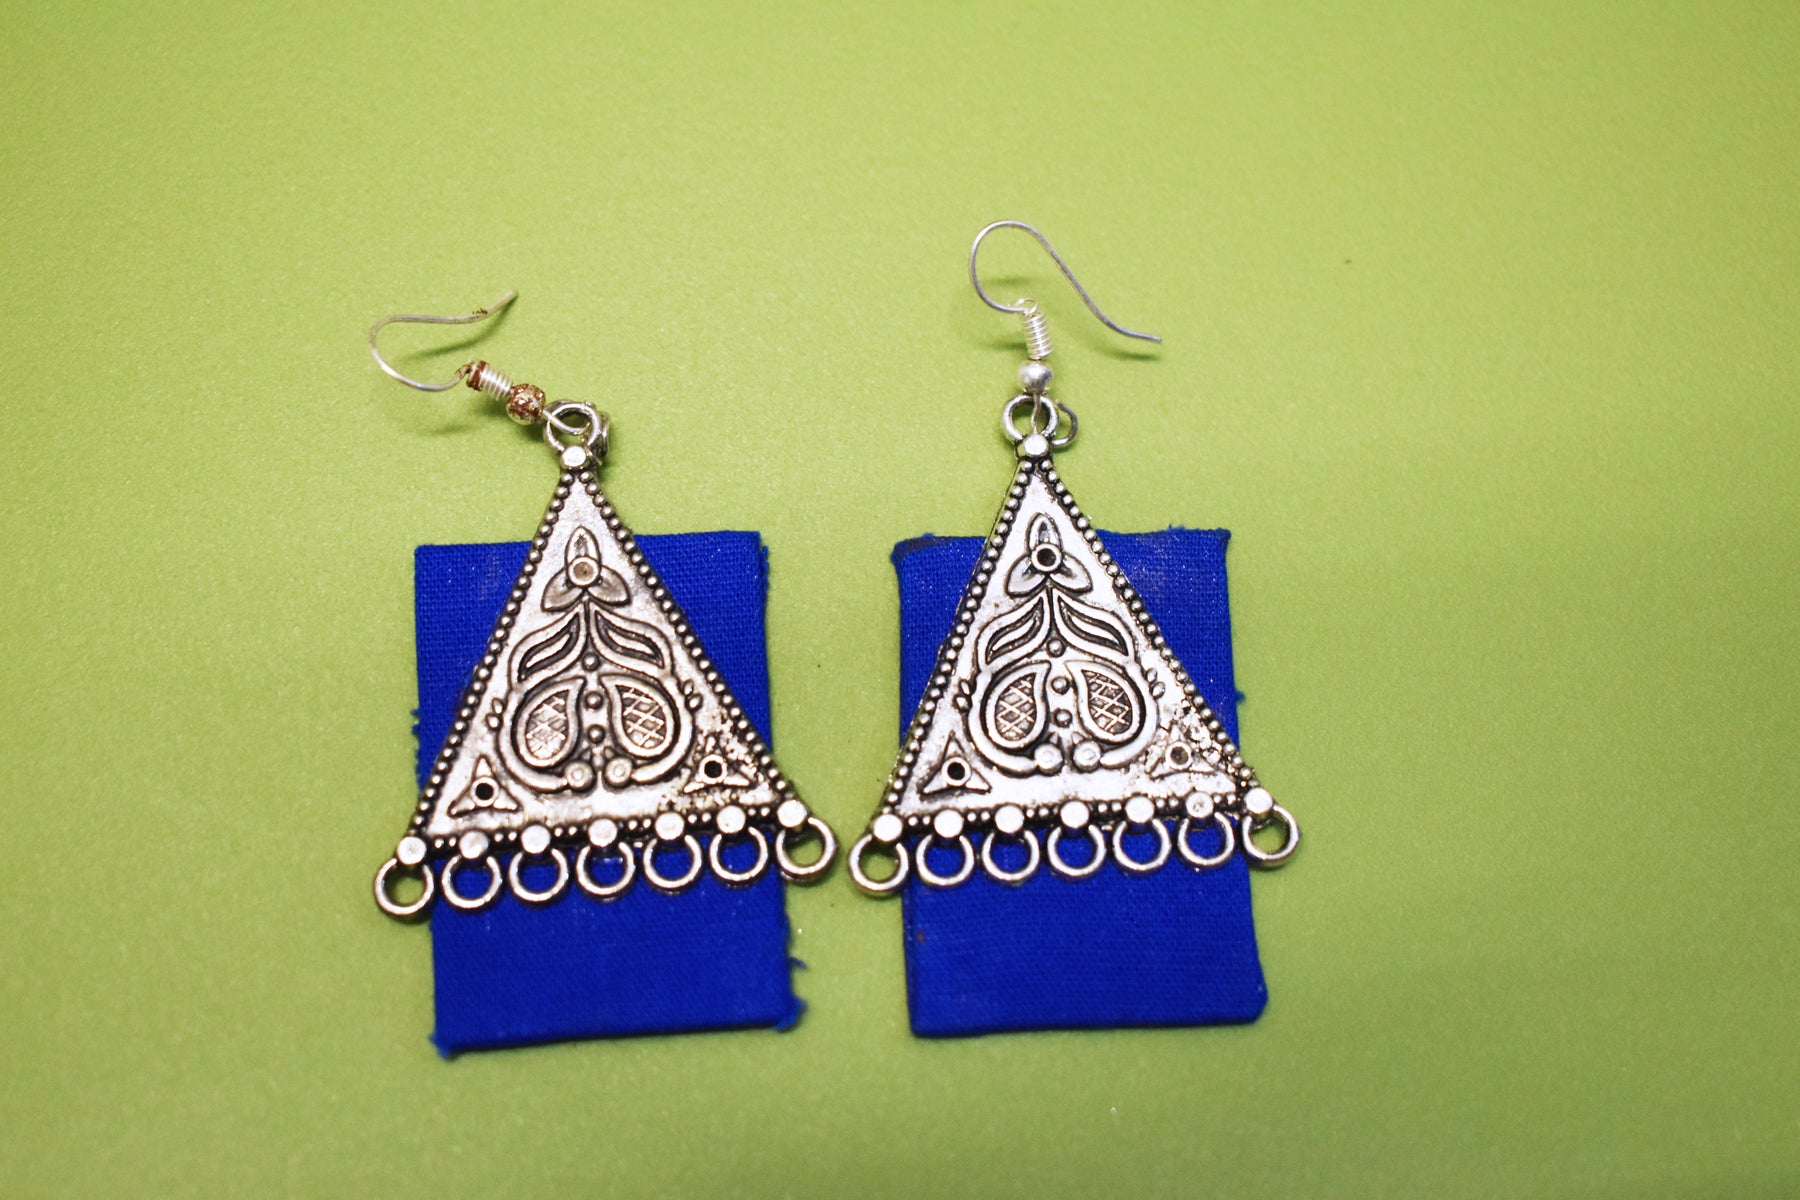 Detec Homzë Metal Ethnic Silver Handmade Earrings